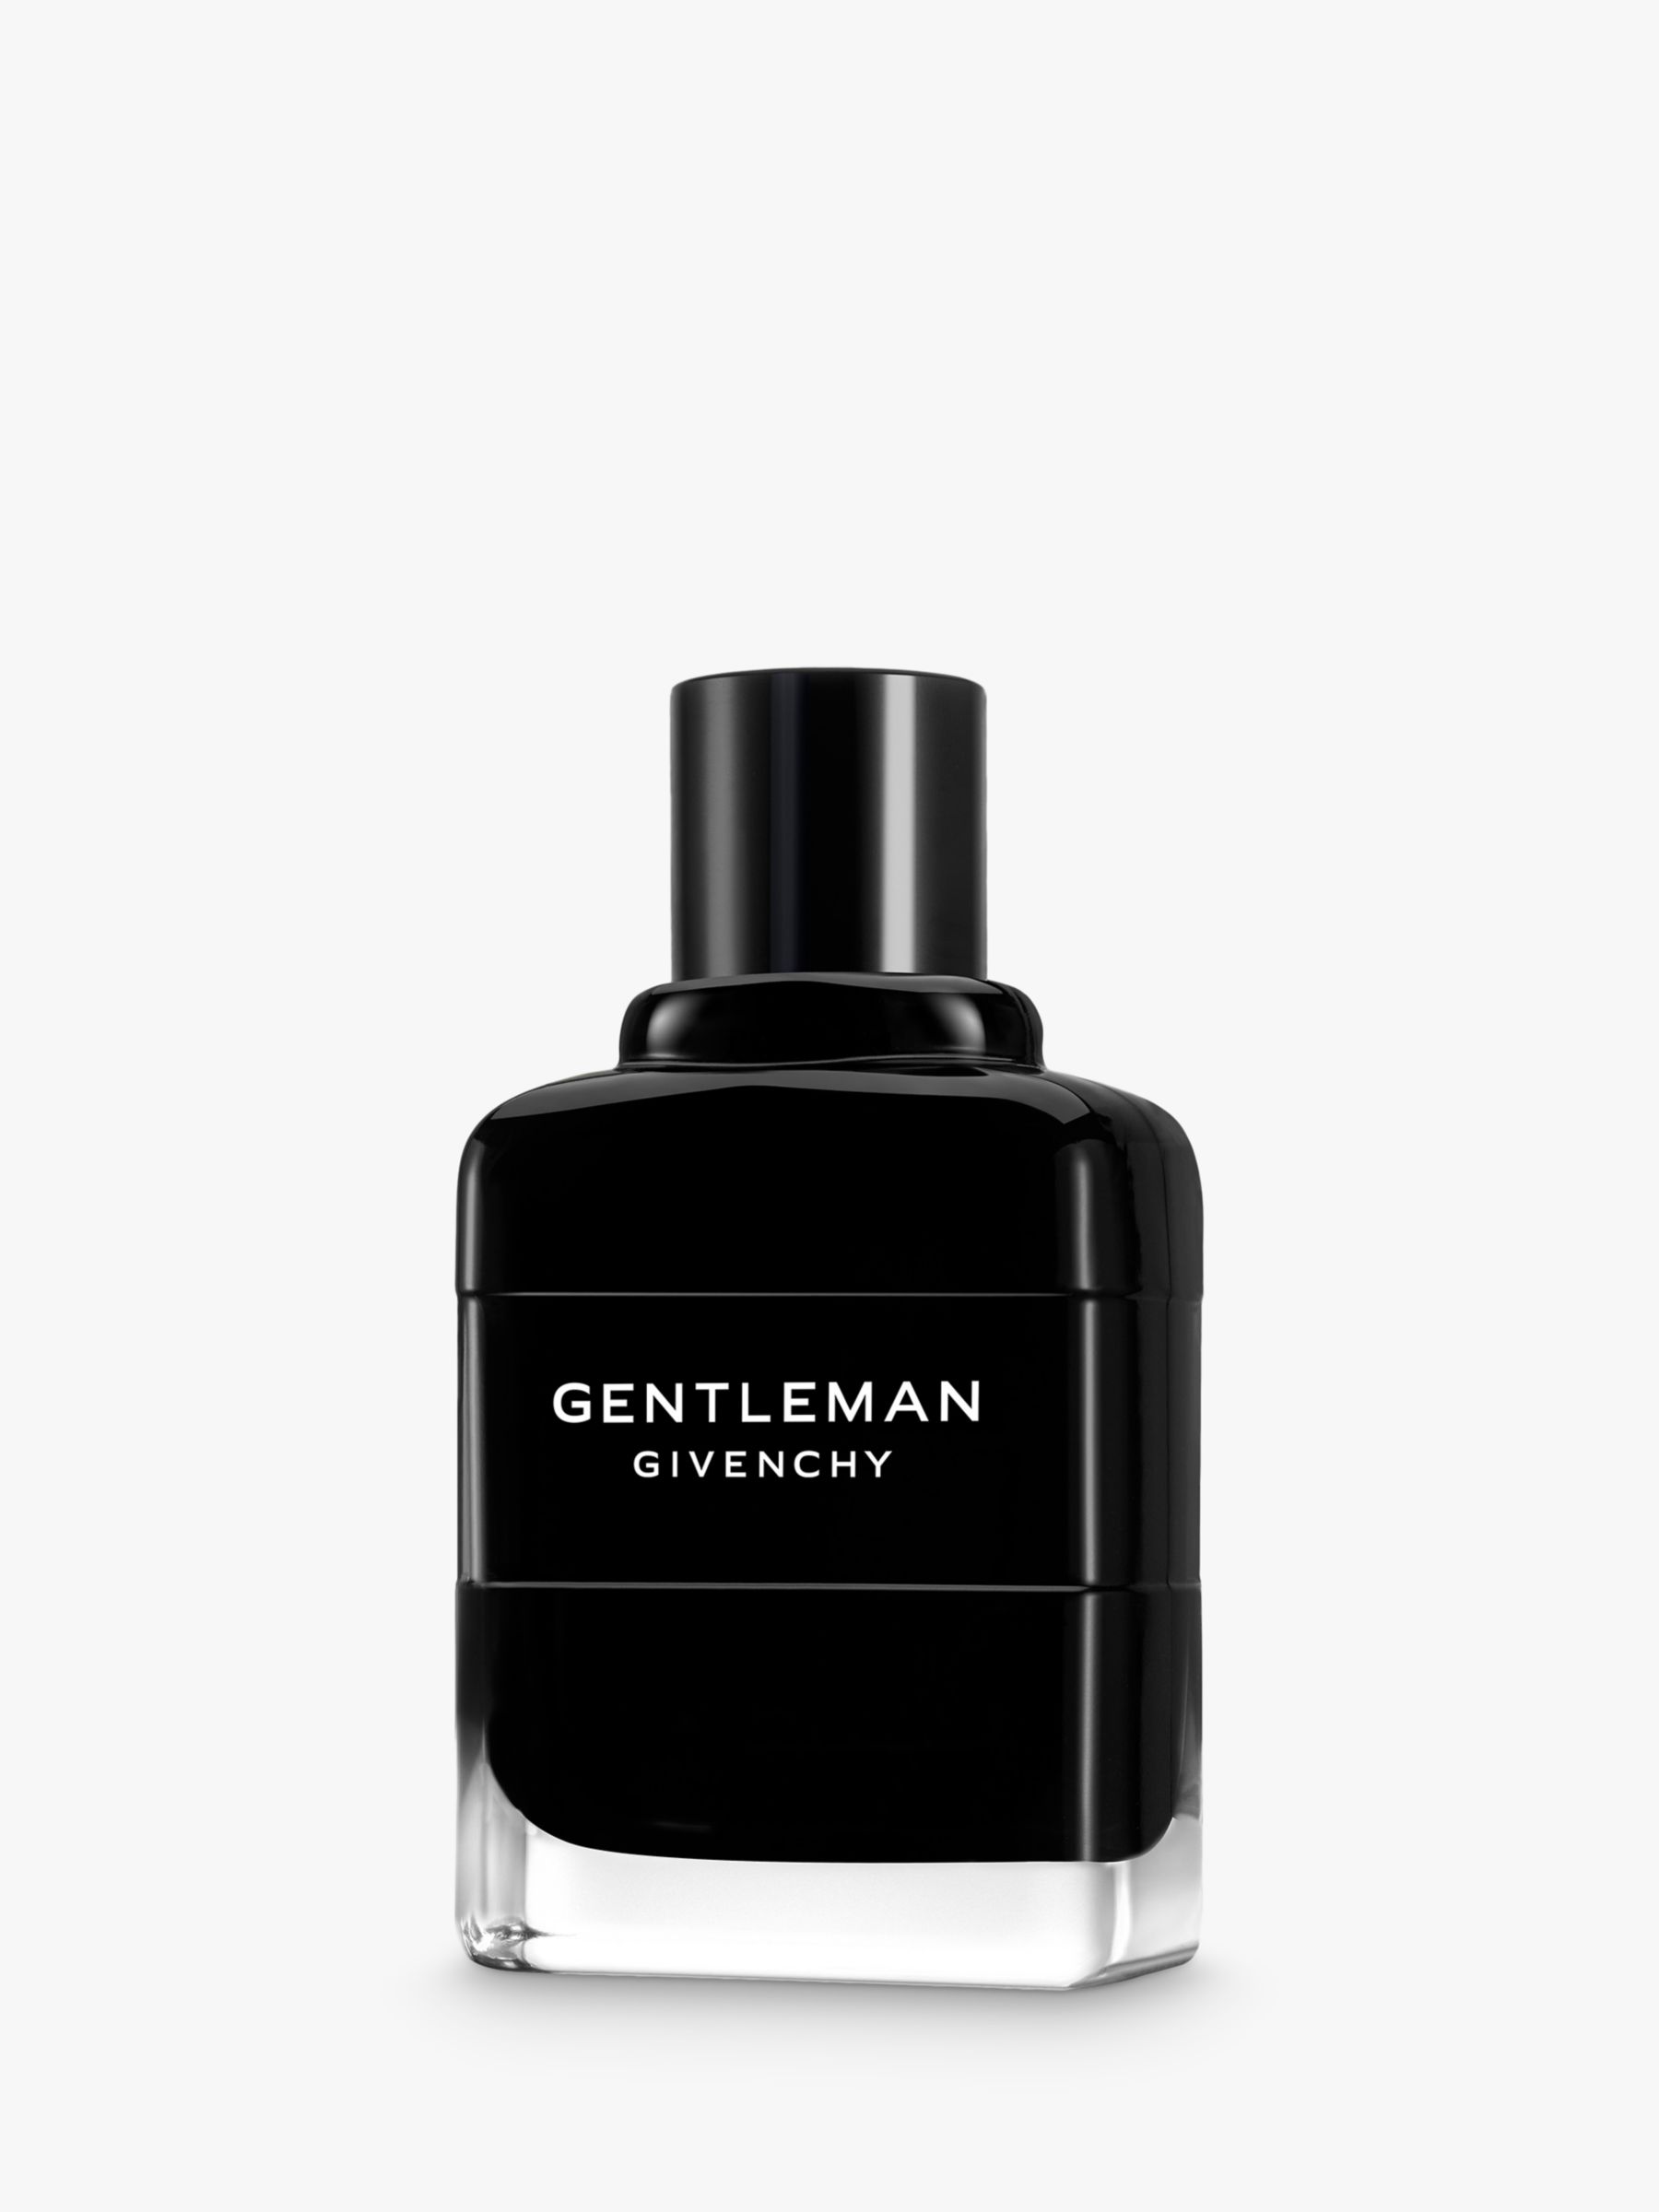 Givenchy Gentleman Eau de Parfum, 60ml at John Lewis & Partners